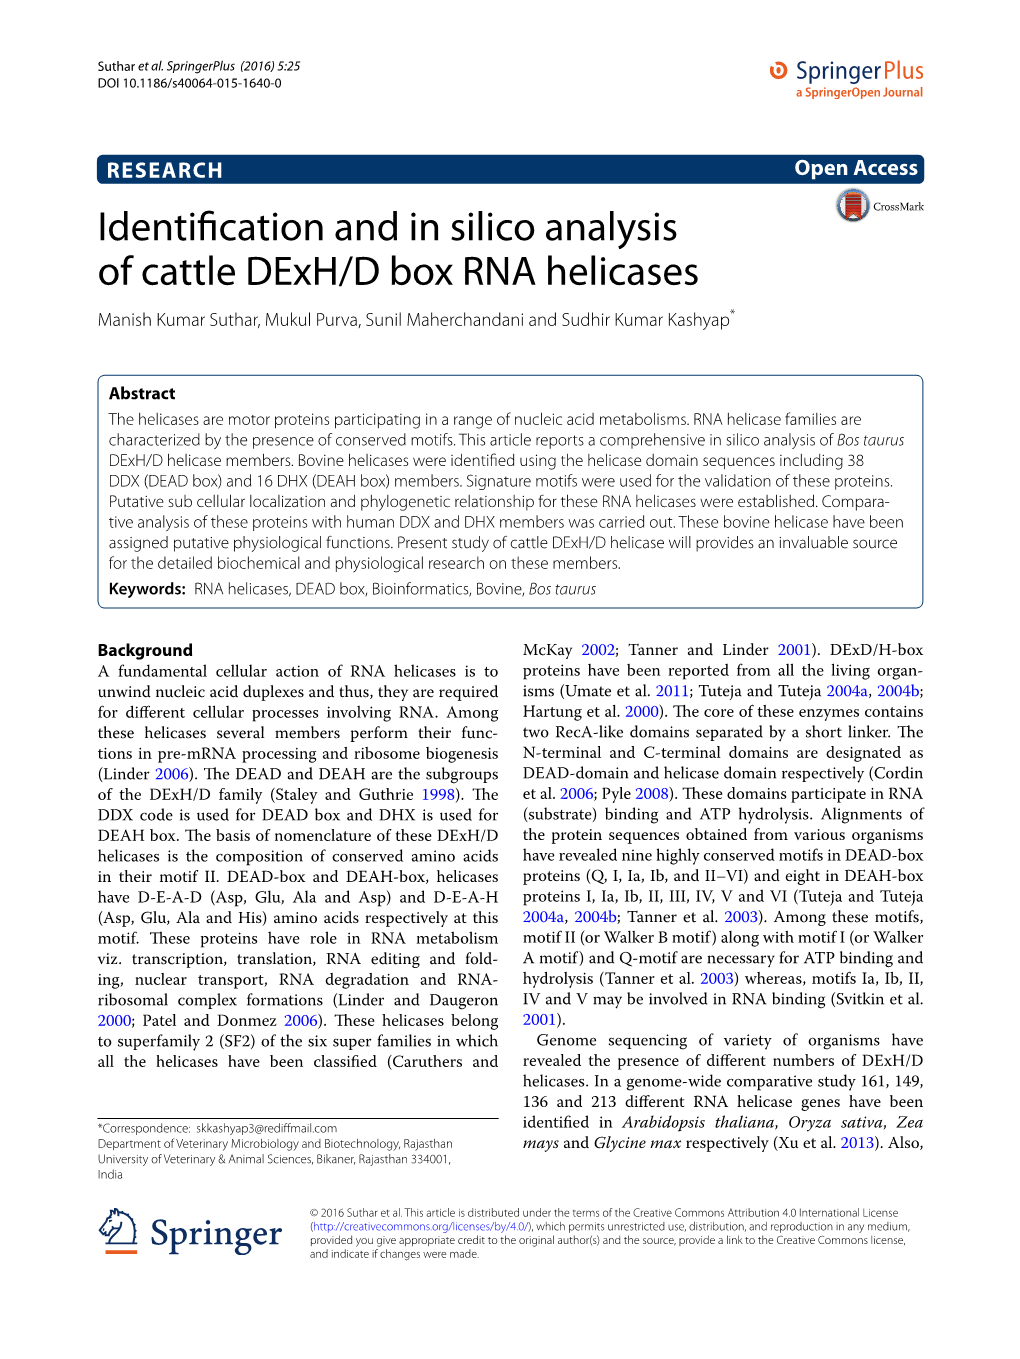 Identification and in Silico Analysis of Cattle Dexh/D Box RNA Helicases Manish Kumar Suthar, Mukul Purva, Sunil Maherchandani and Sudhir Kumar Kashyap*